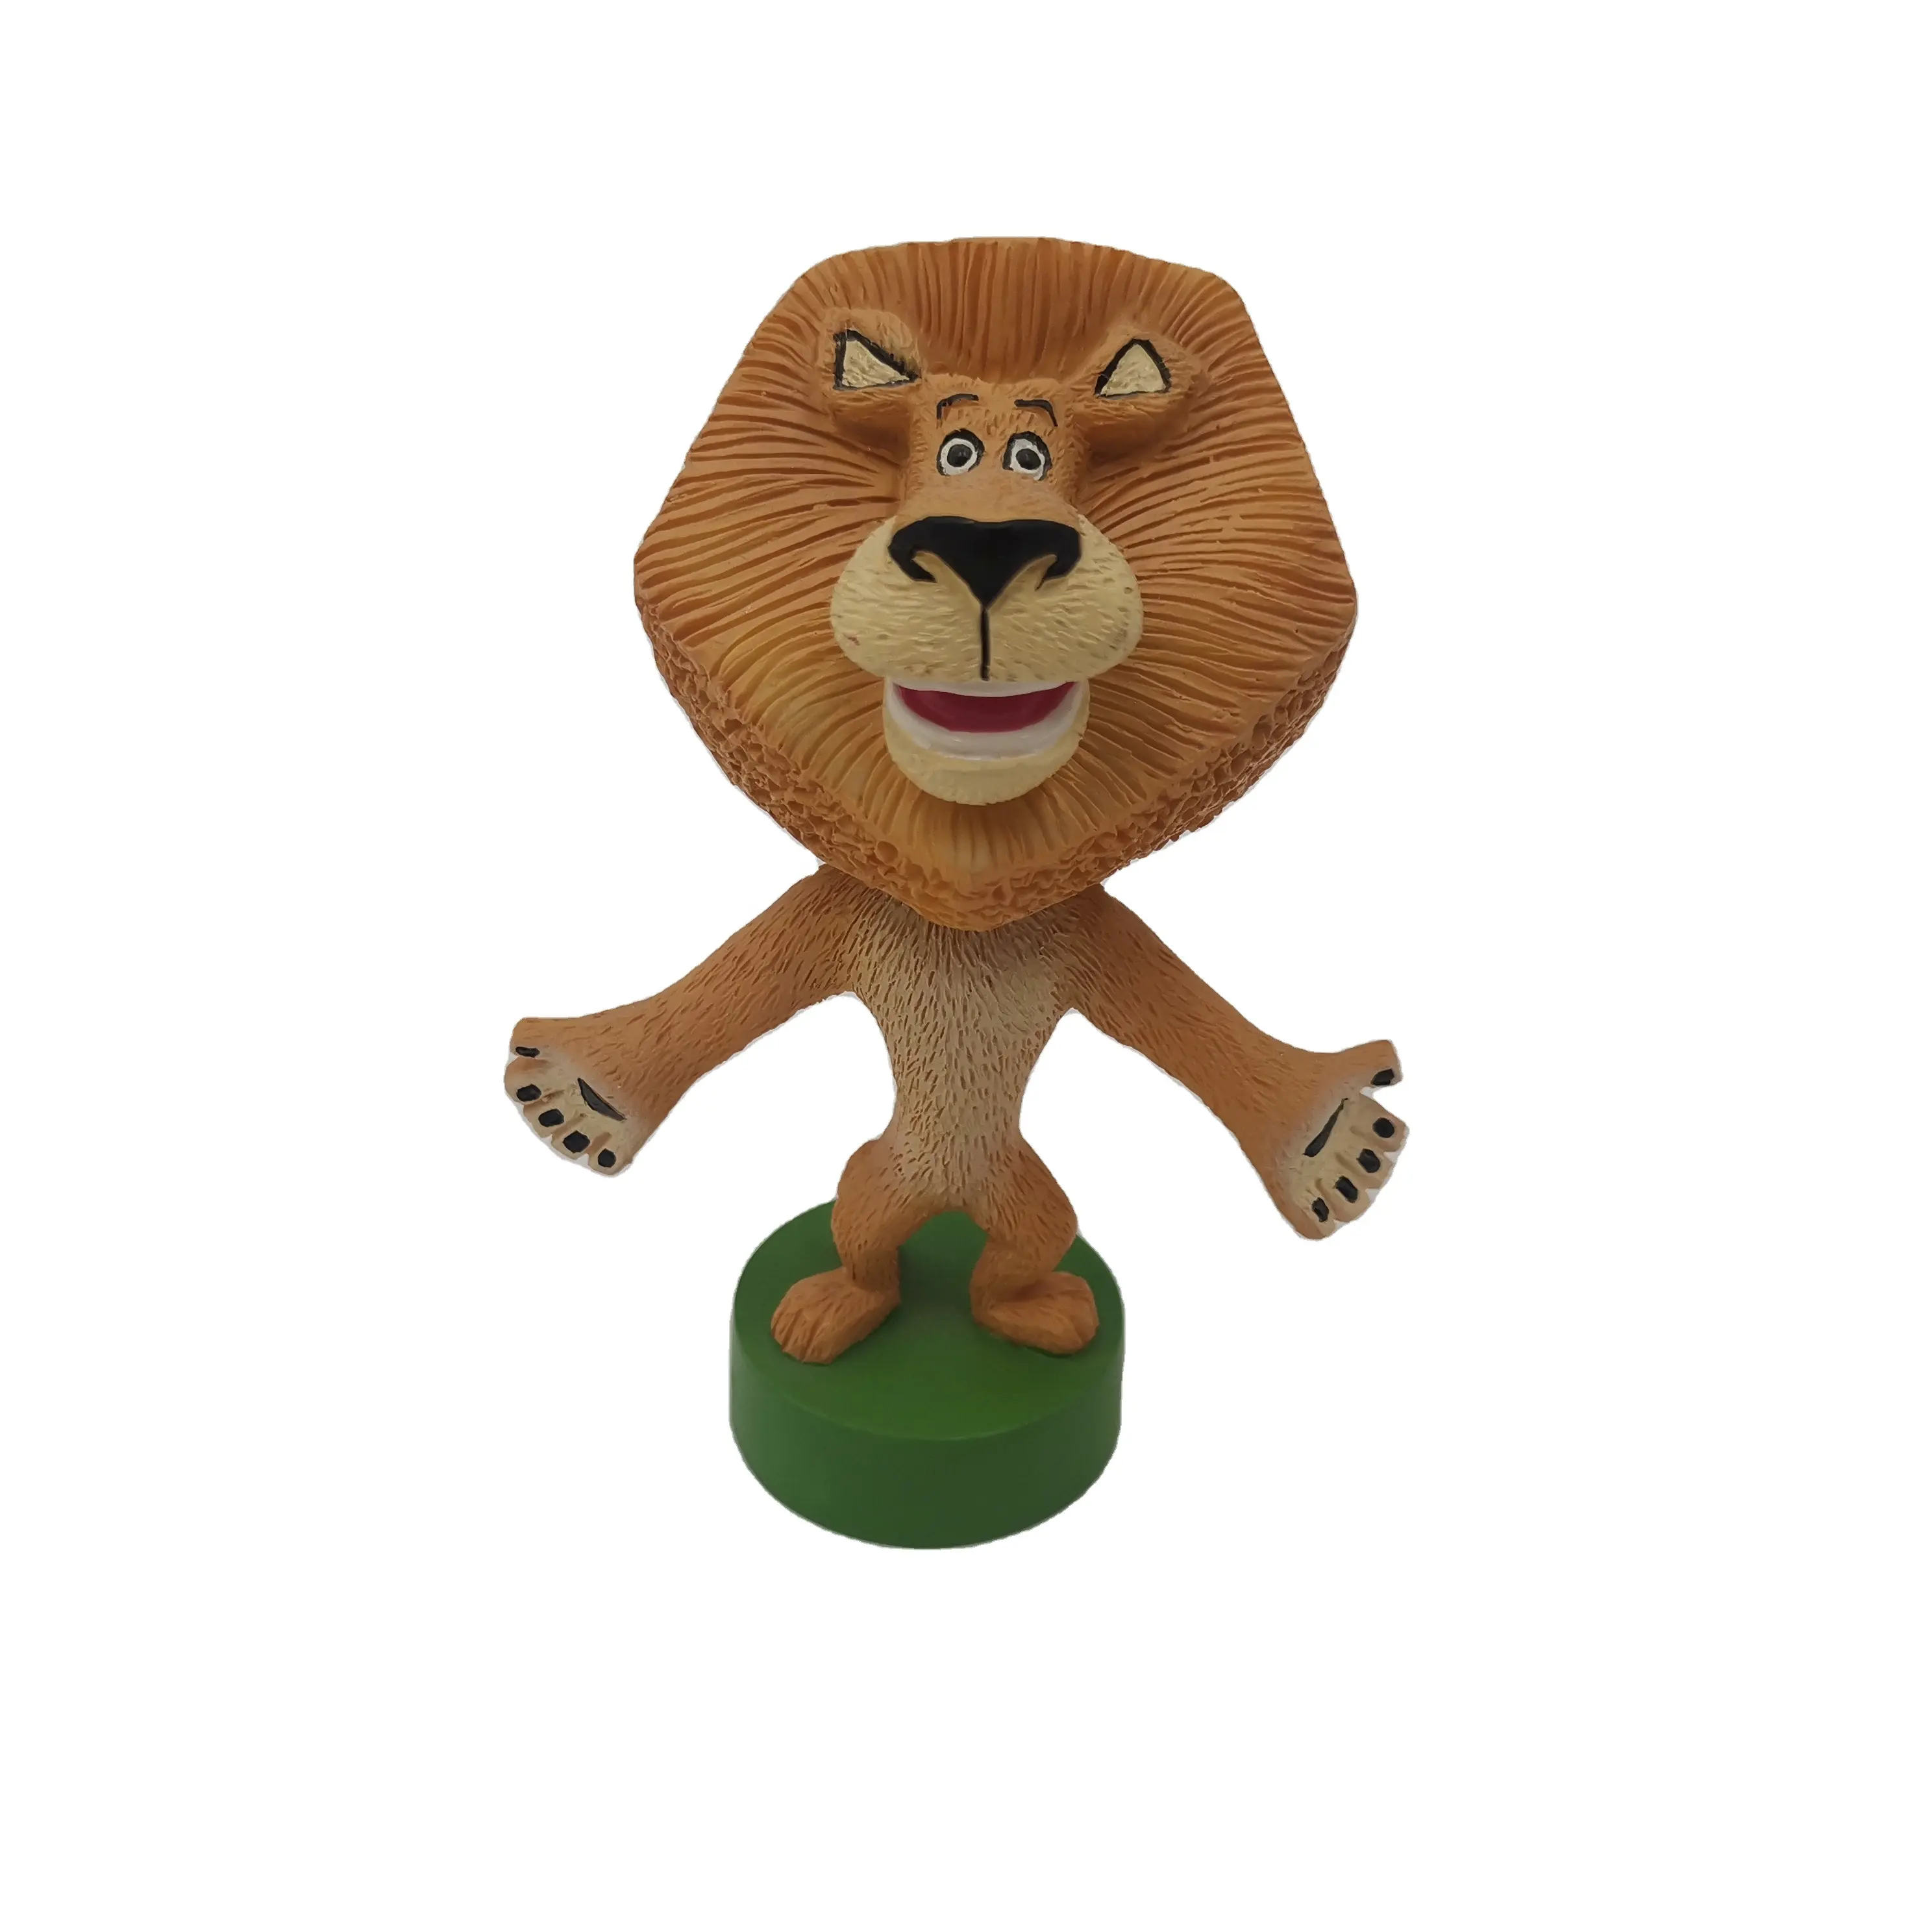 Promotion Custom High Quality 3d Bobblehead Figurine, animal Sport star and character portrait customization Bobble Head Doll